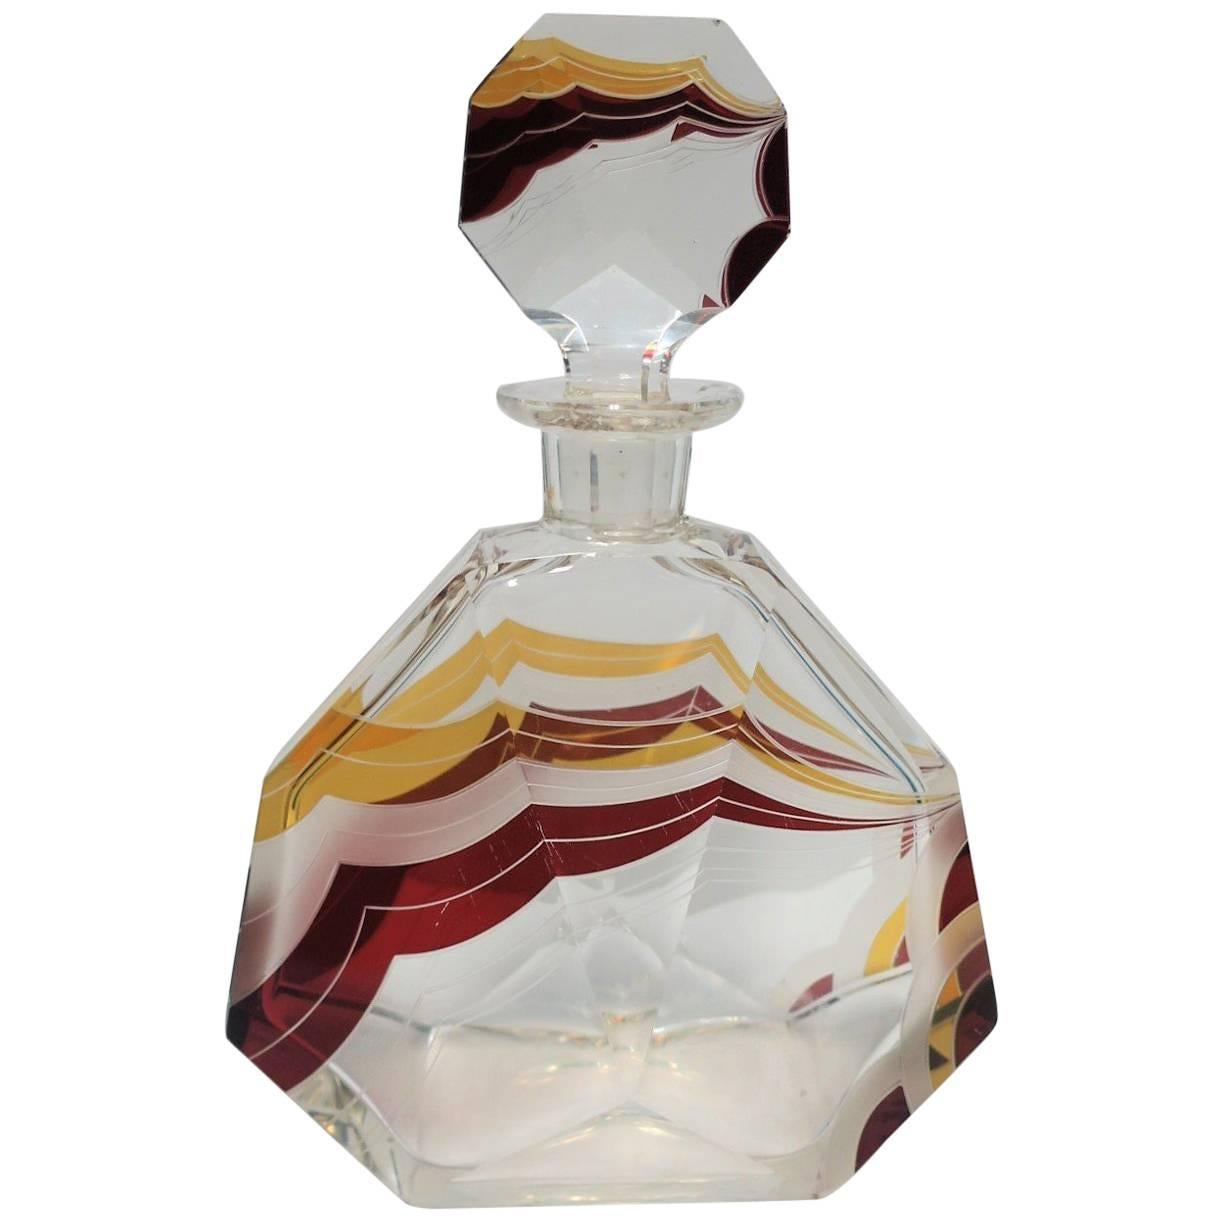 European Art Deco Liquor or Spirits Crystal Decanter by Designer Karl Palda